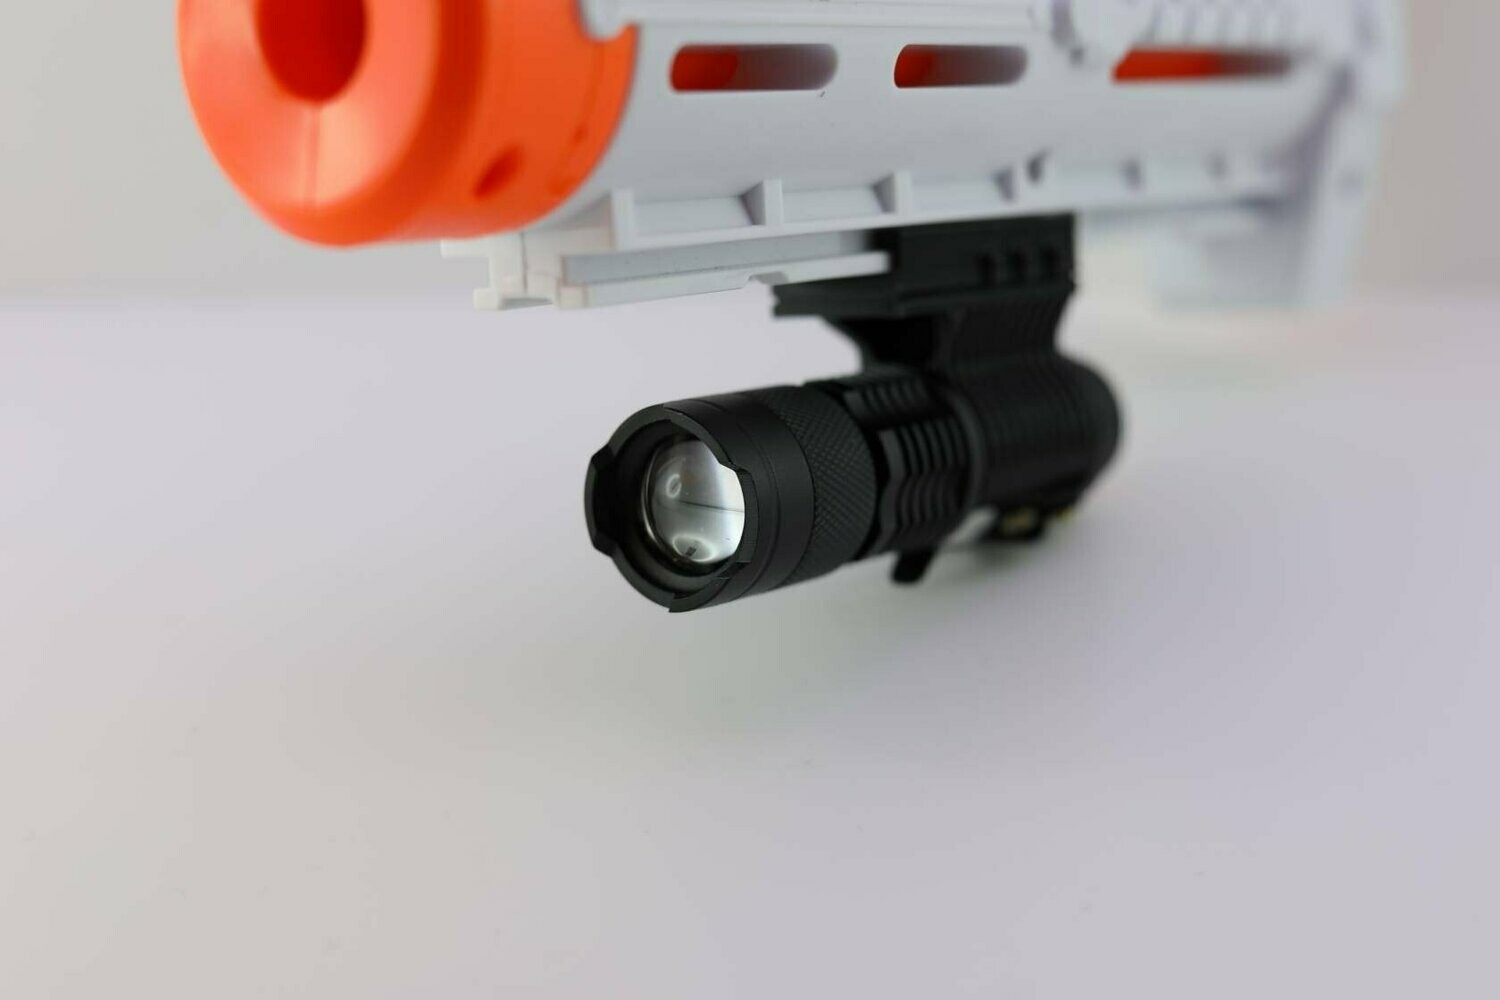 Livlig Patriotisk overalt Tactical flash light for Nerf guns. LED, adjustable focus, 3 light  modes,secure rail attachment, AA battery